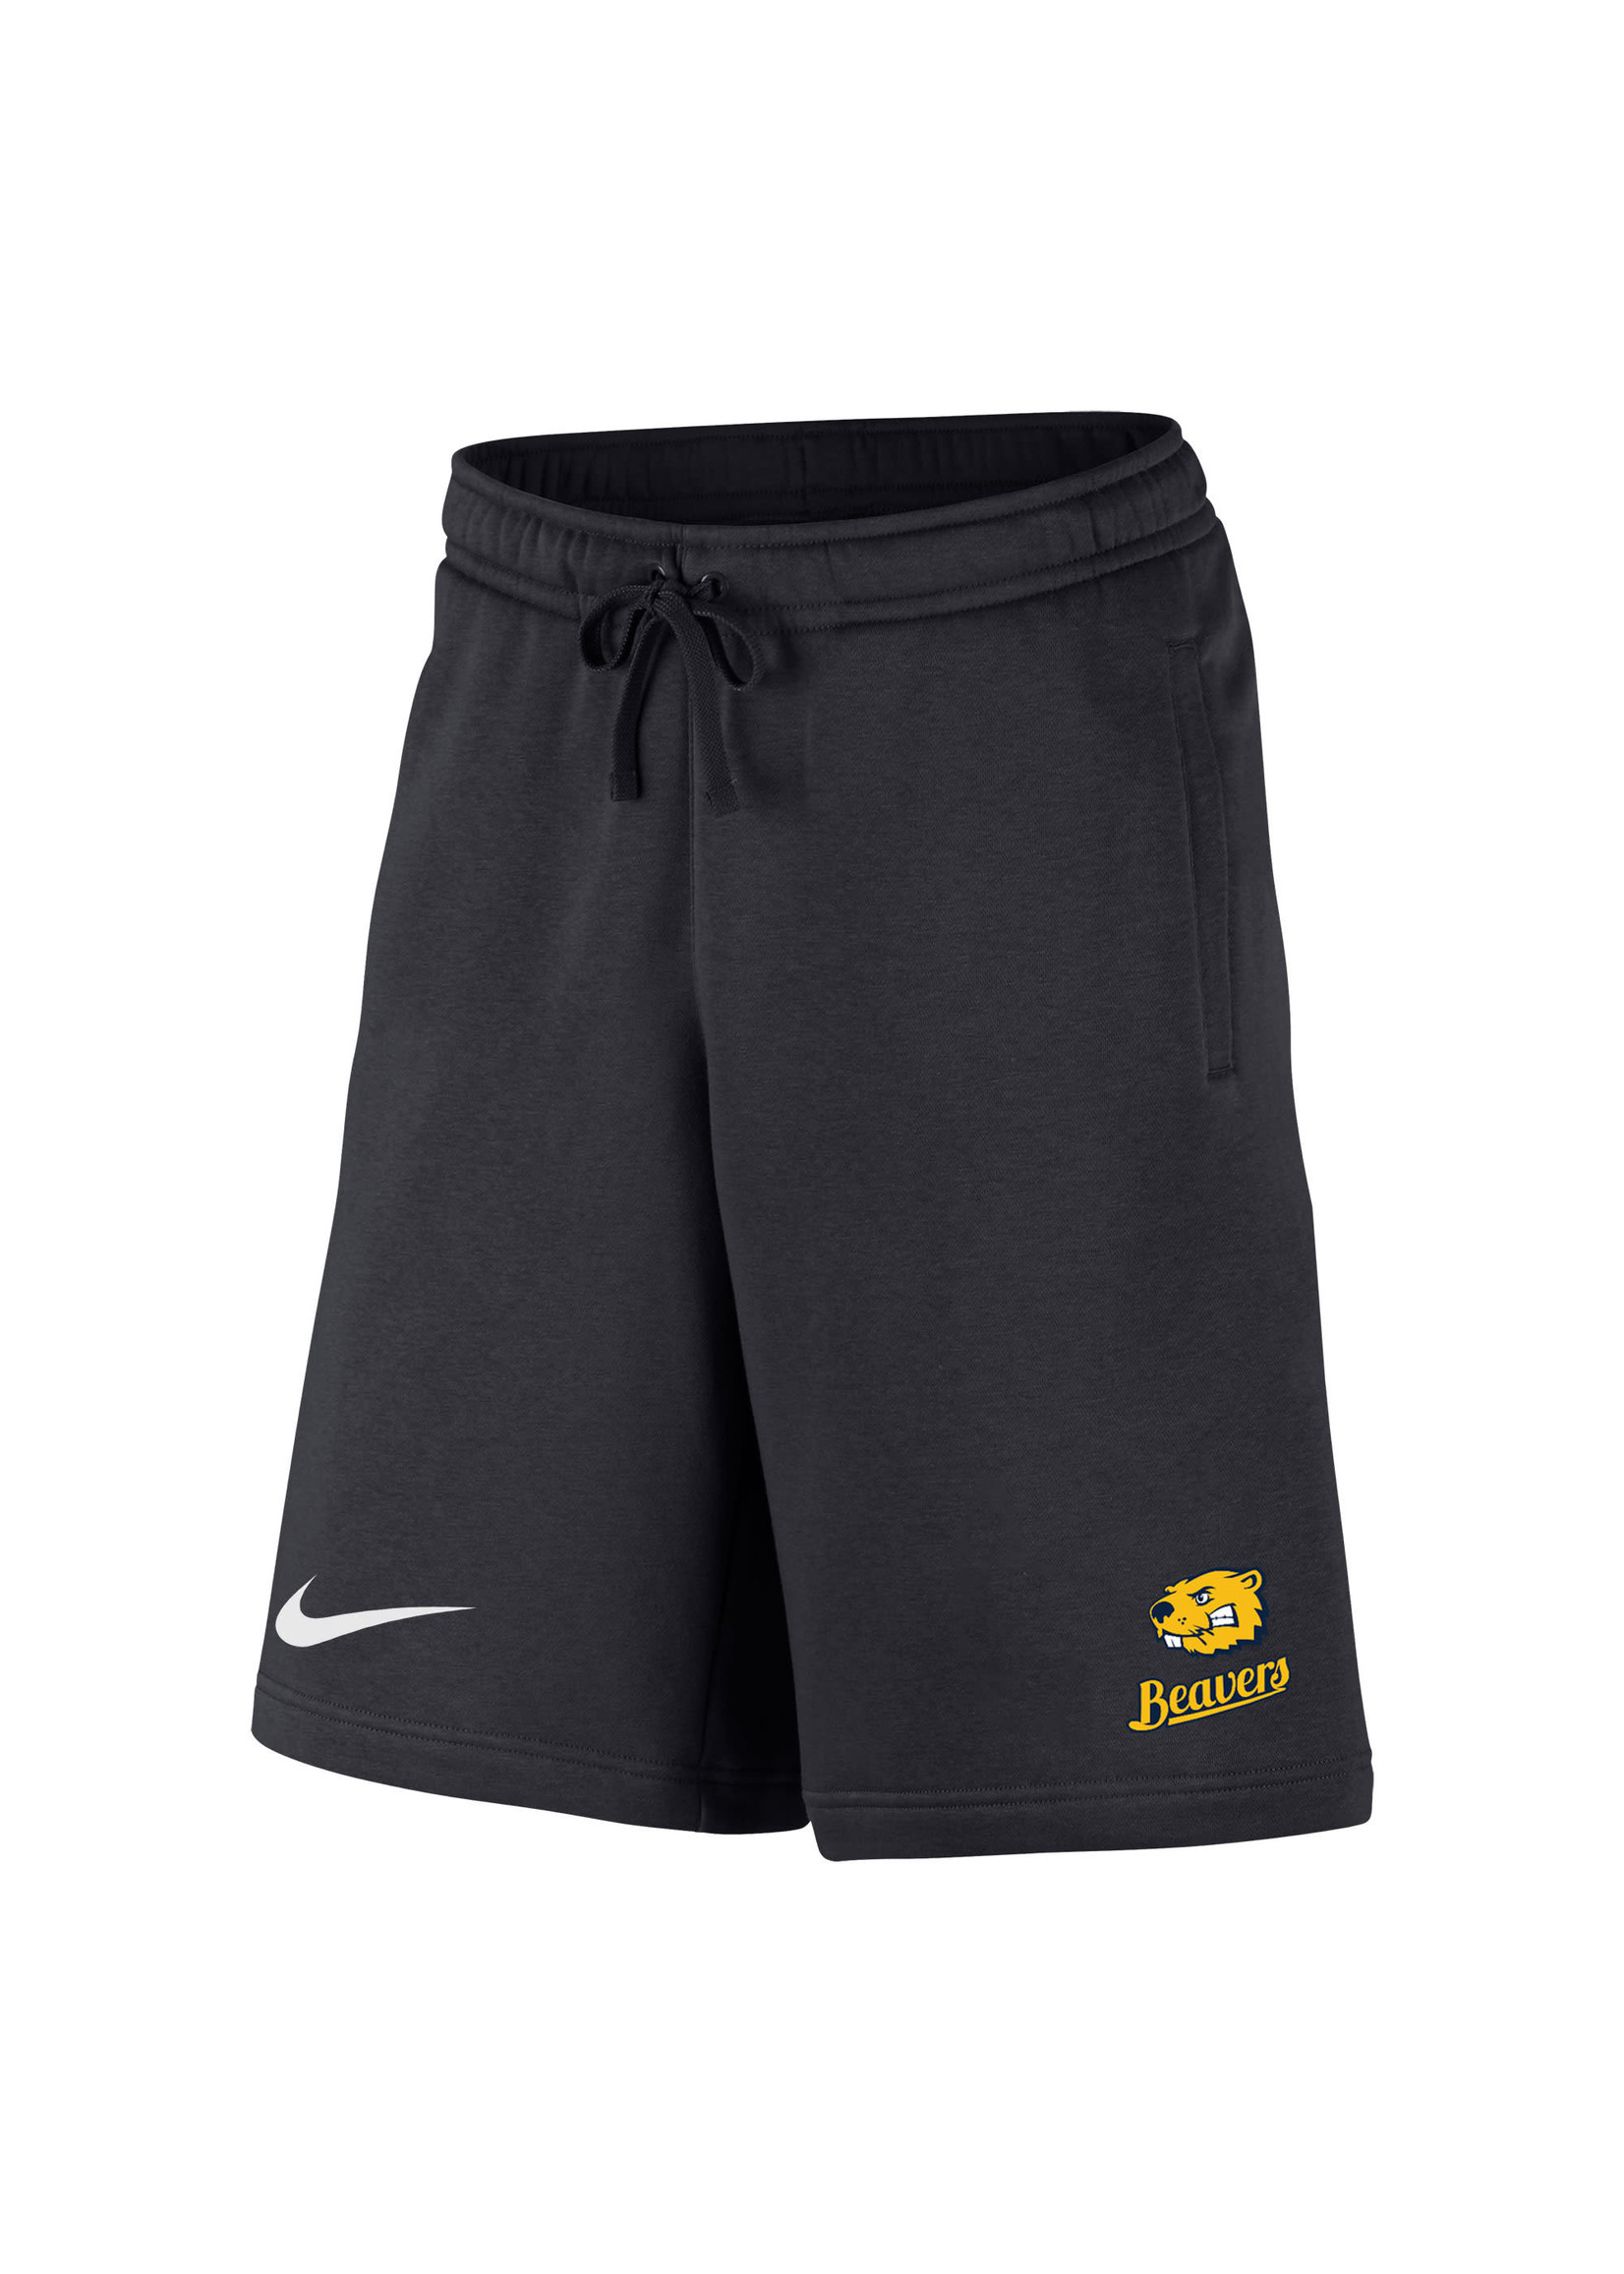 Nike Nike BH & Beavers Fleece Shorts